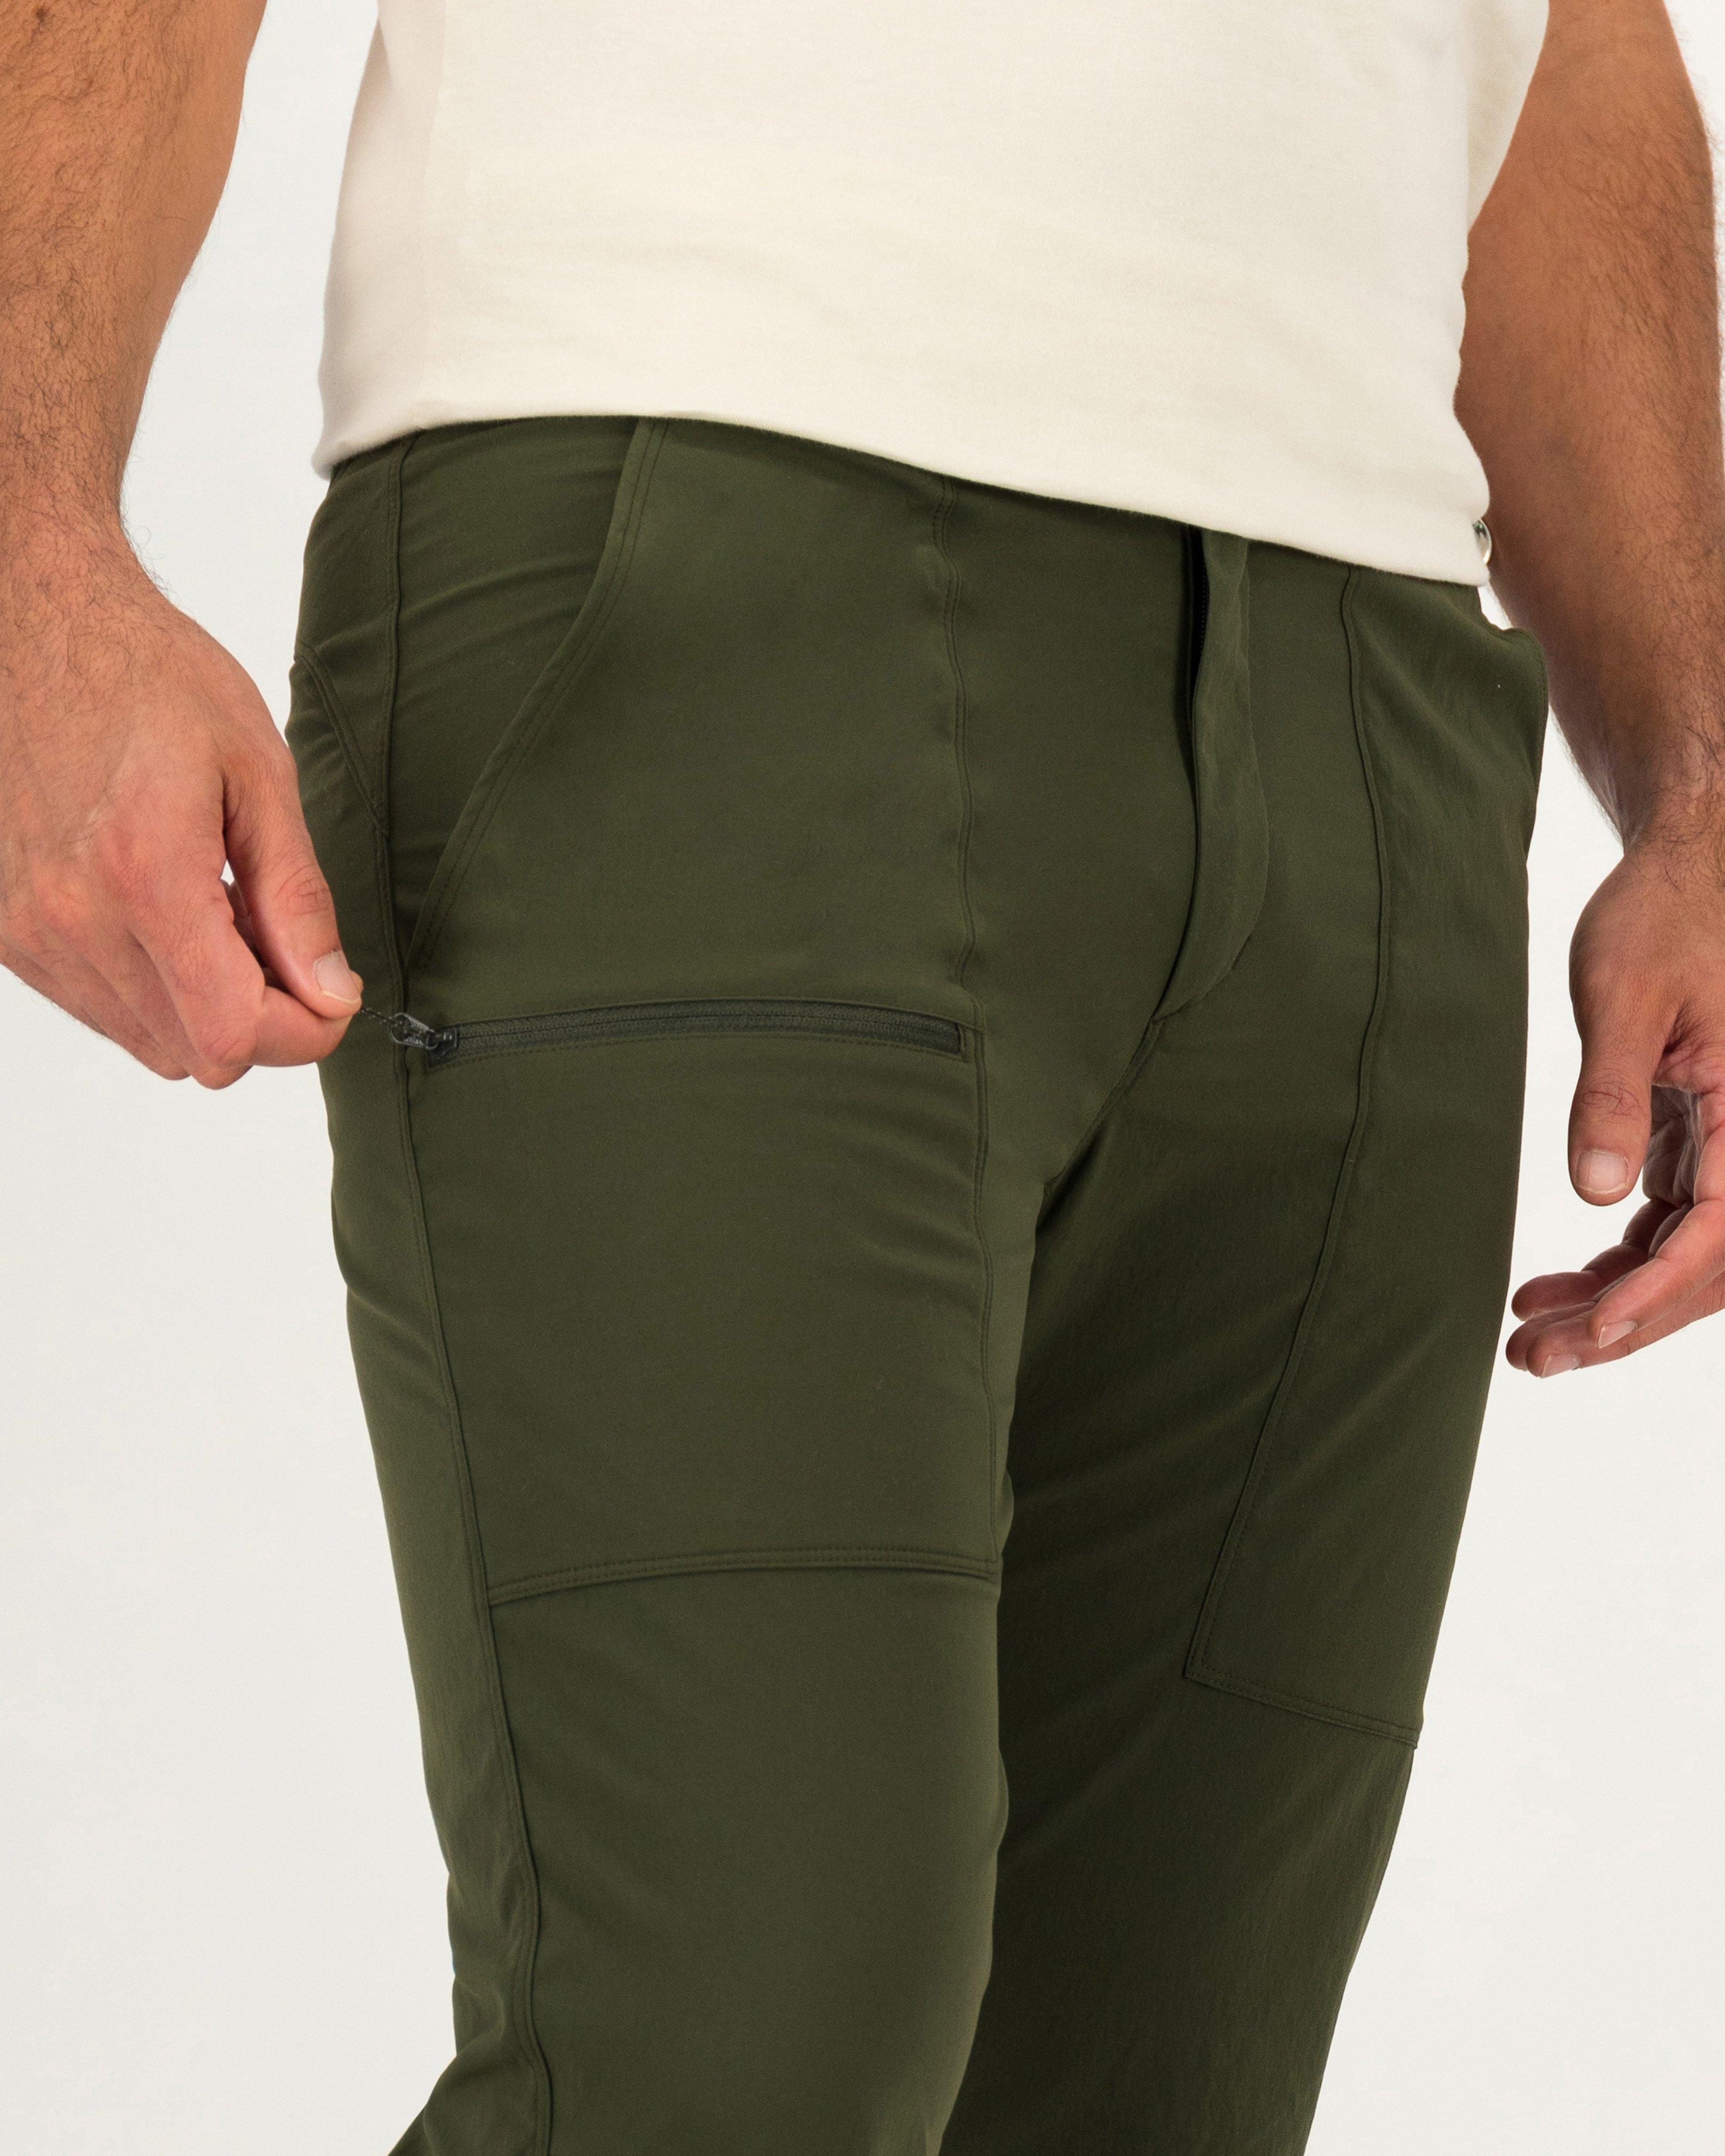 Salomon Men's Outrack Pants -  Dark Green/Dark Olive